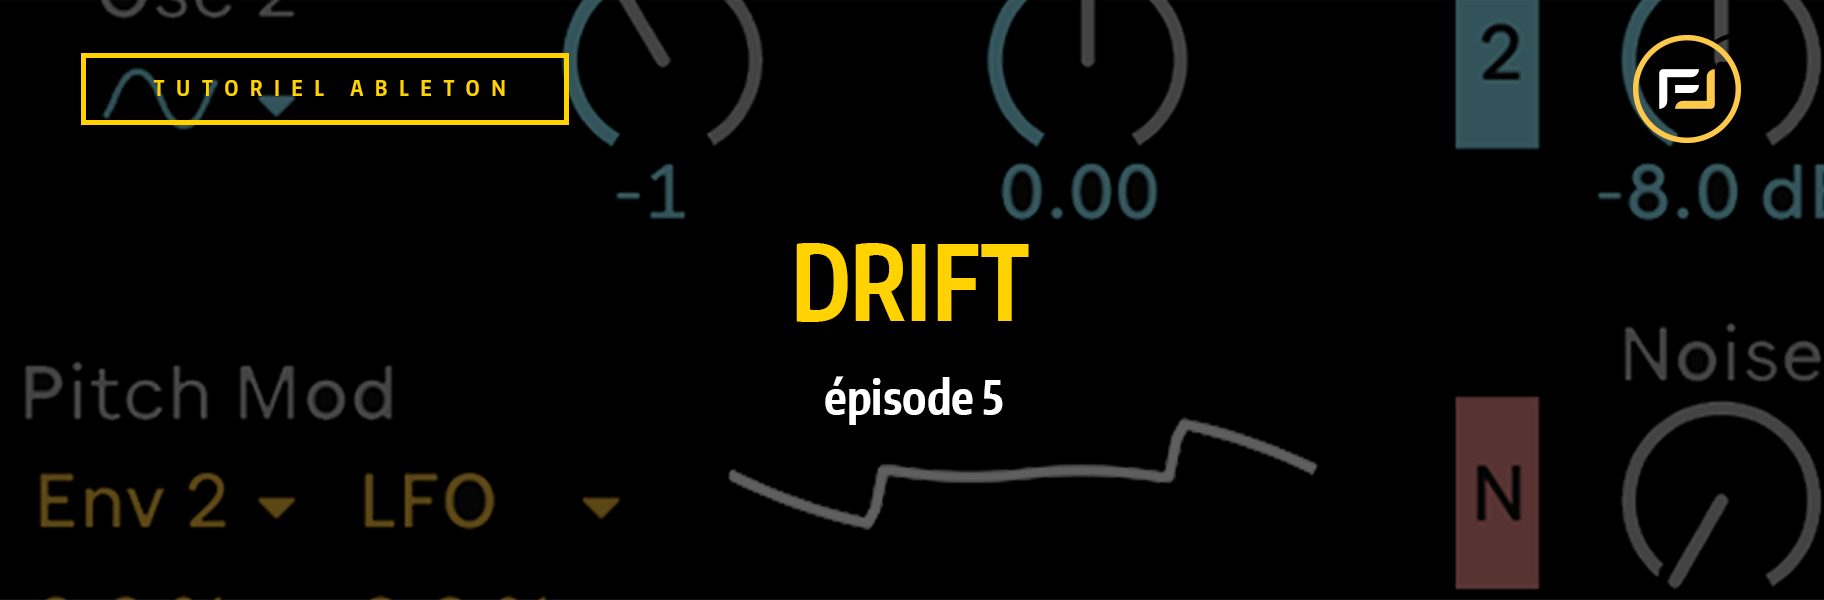 Tutoriel Ableton Live - Drift episode 5